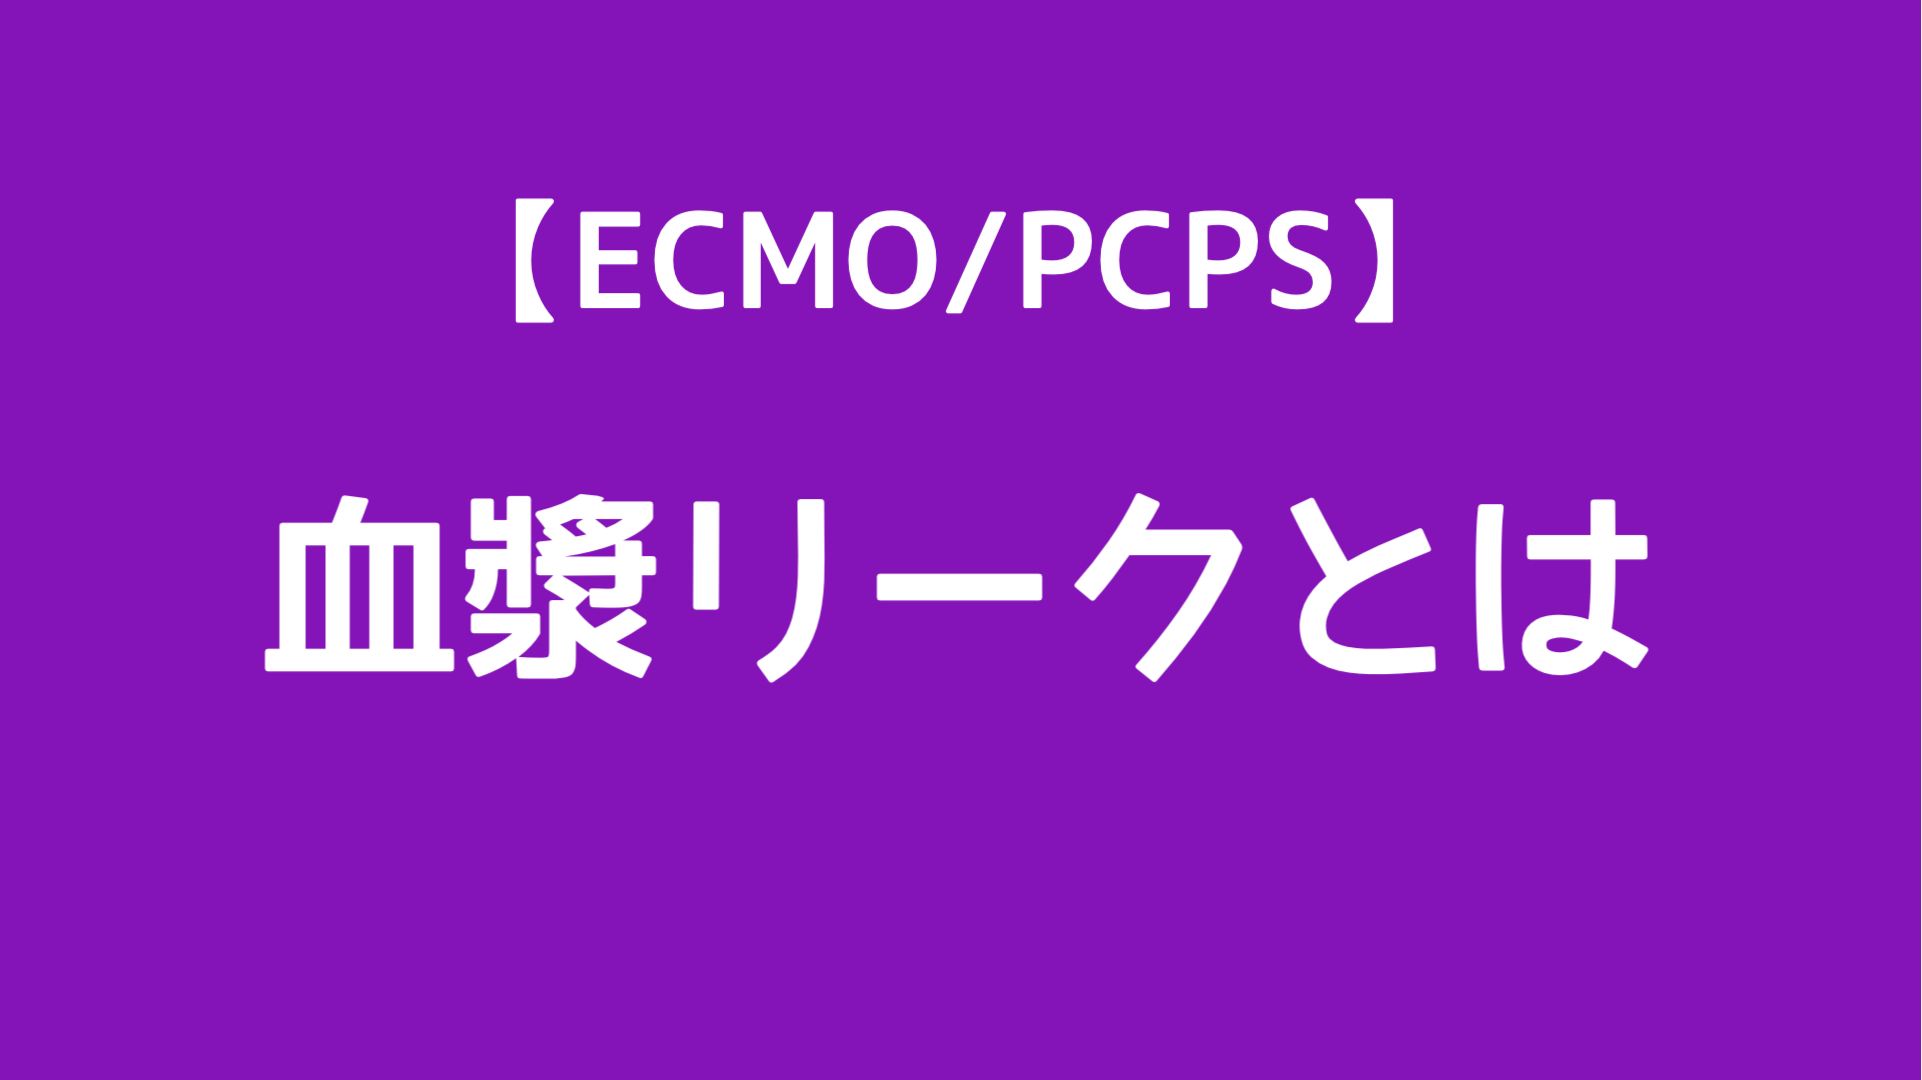 ECMO,PCPS,血漿リーク